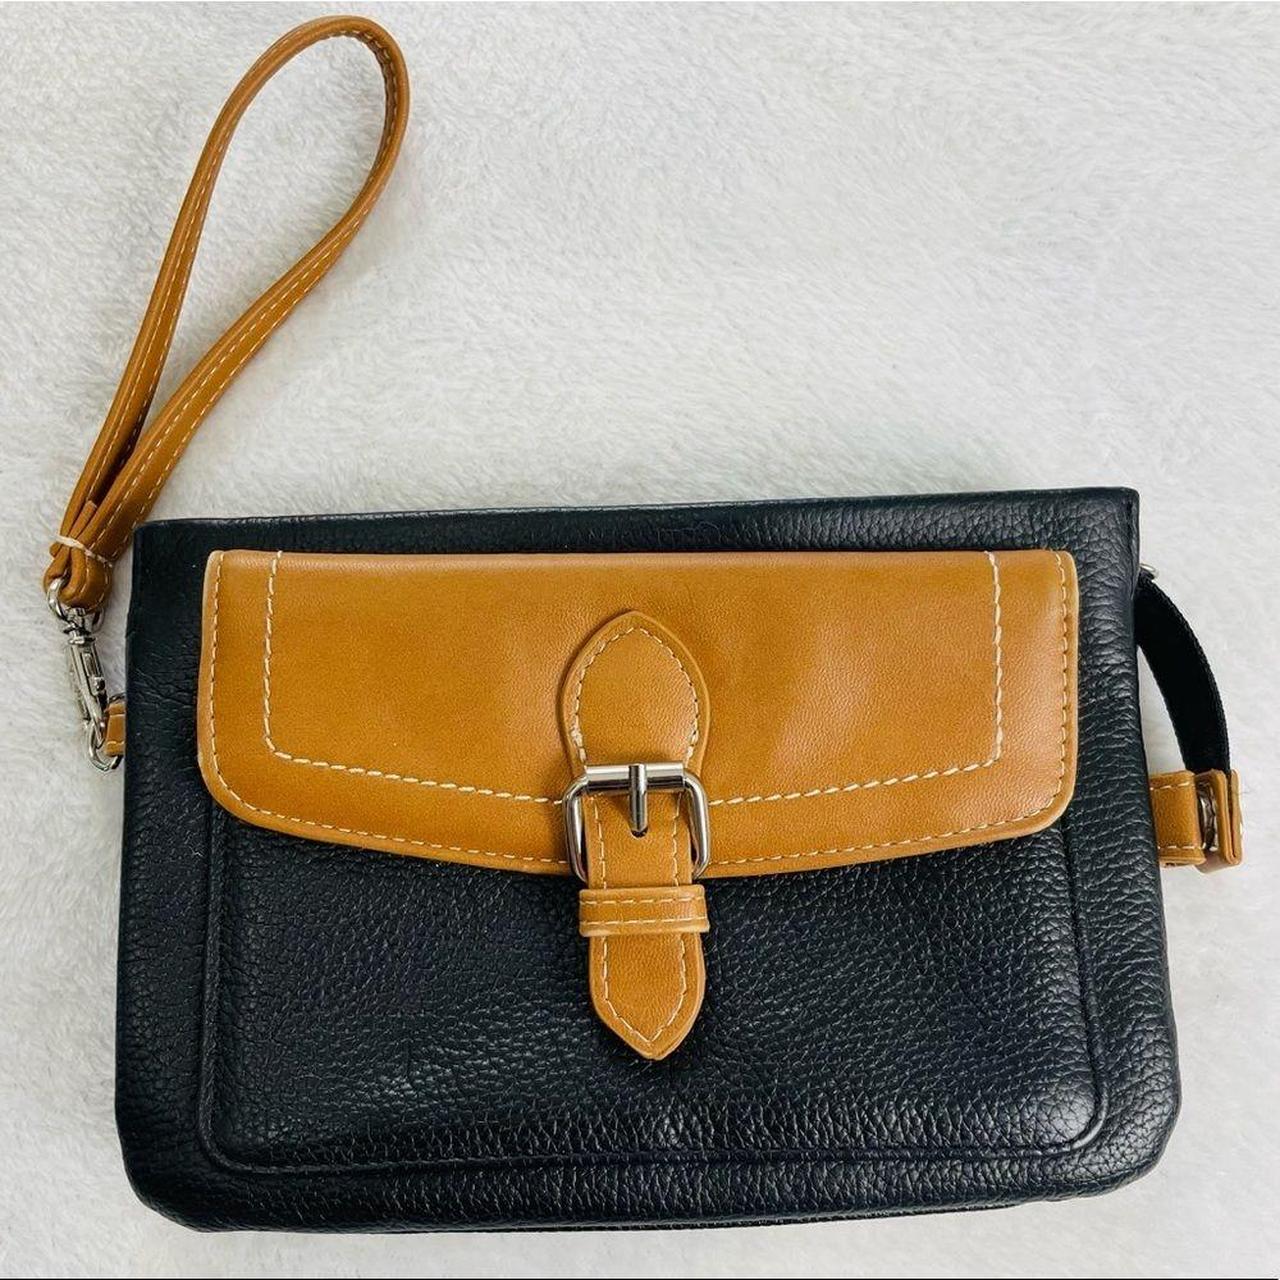 a Giani Bernini wallet Genuine leather~ Barely - Depop